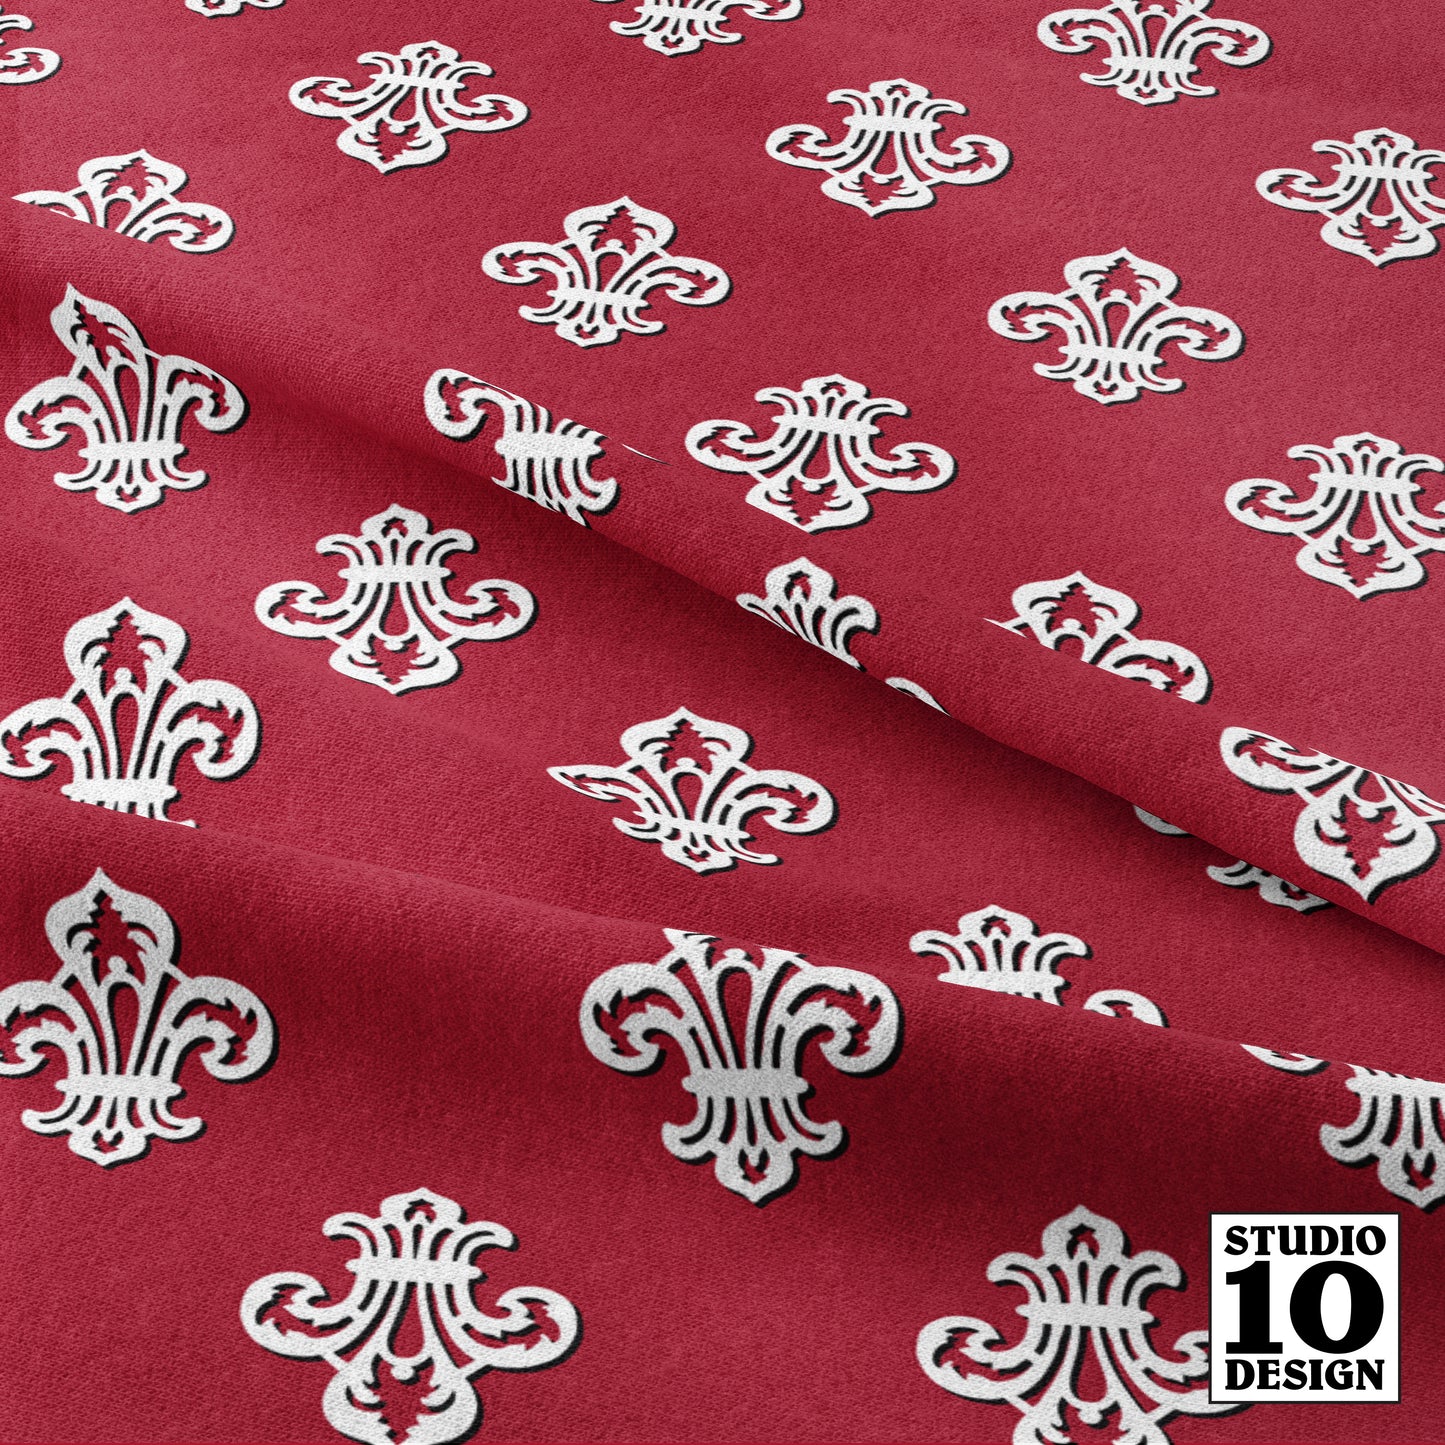 Fleur de Lis (Red, White, Black) Printed Fabric by Studio Ten Design